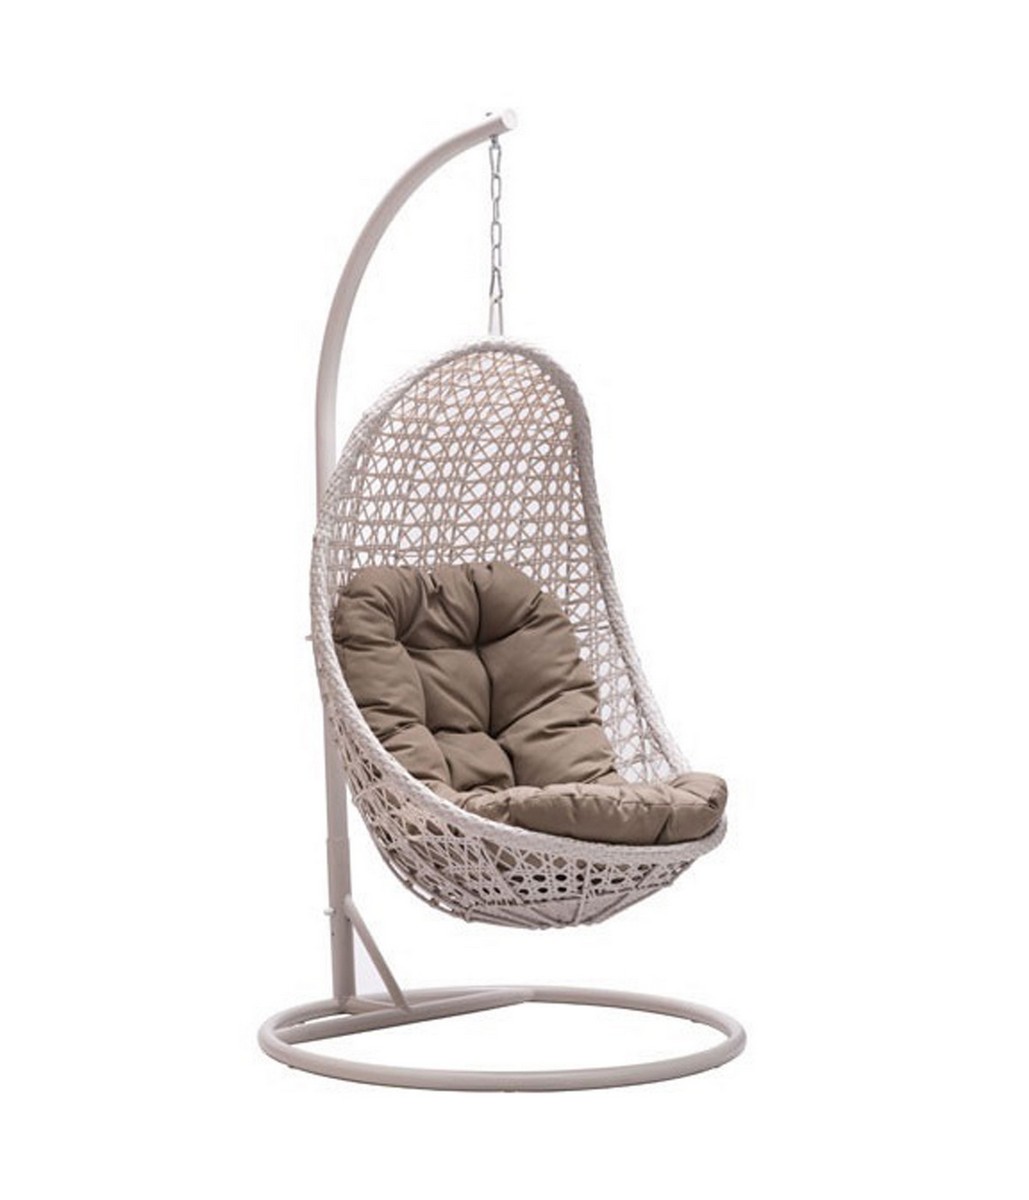 Zuo Modern Sheko Cradle Chair - Pearl